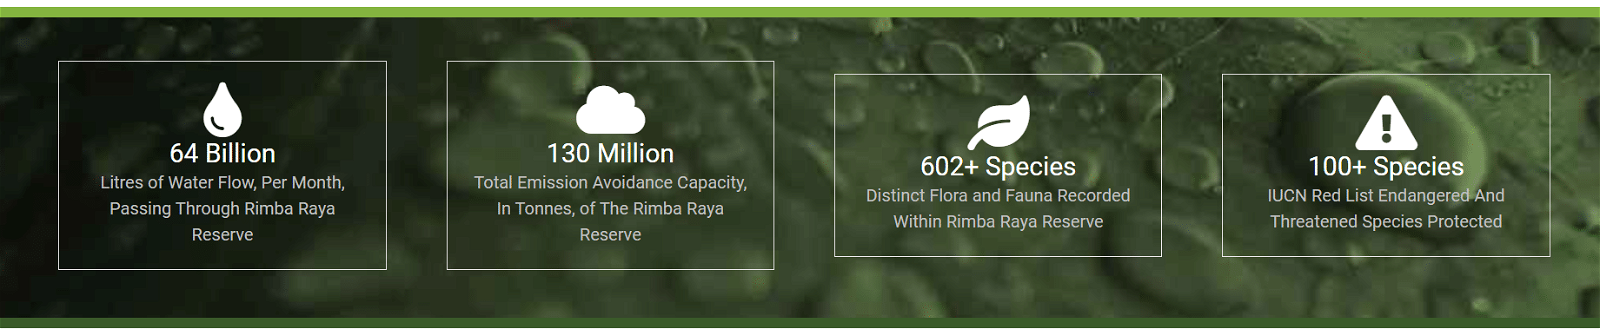 Rimba Raya REDD+ Project Revocation Rattles Carbon Market